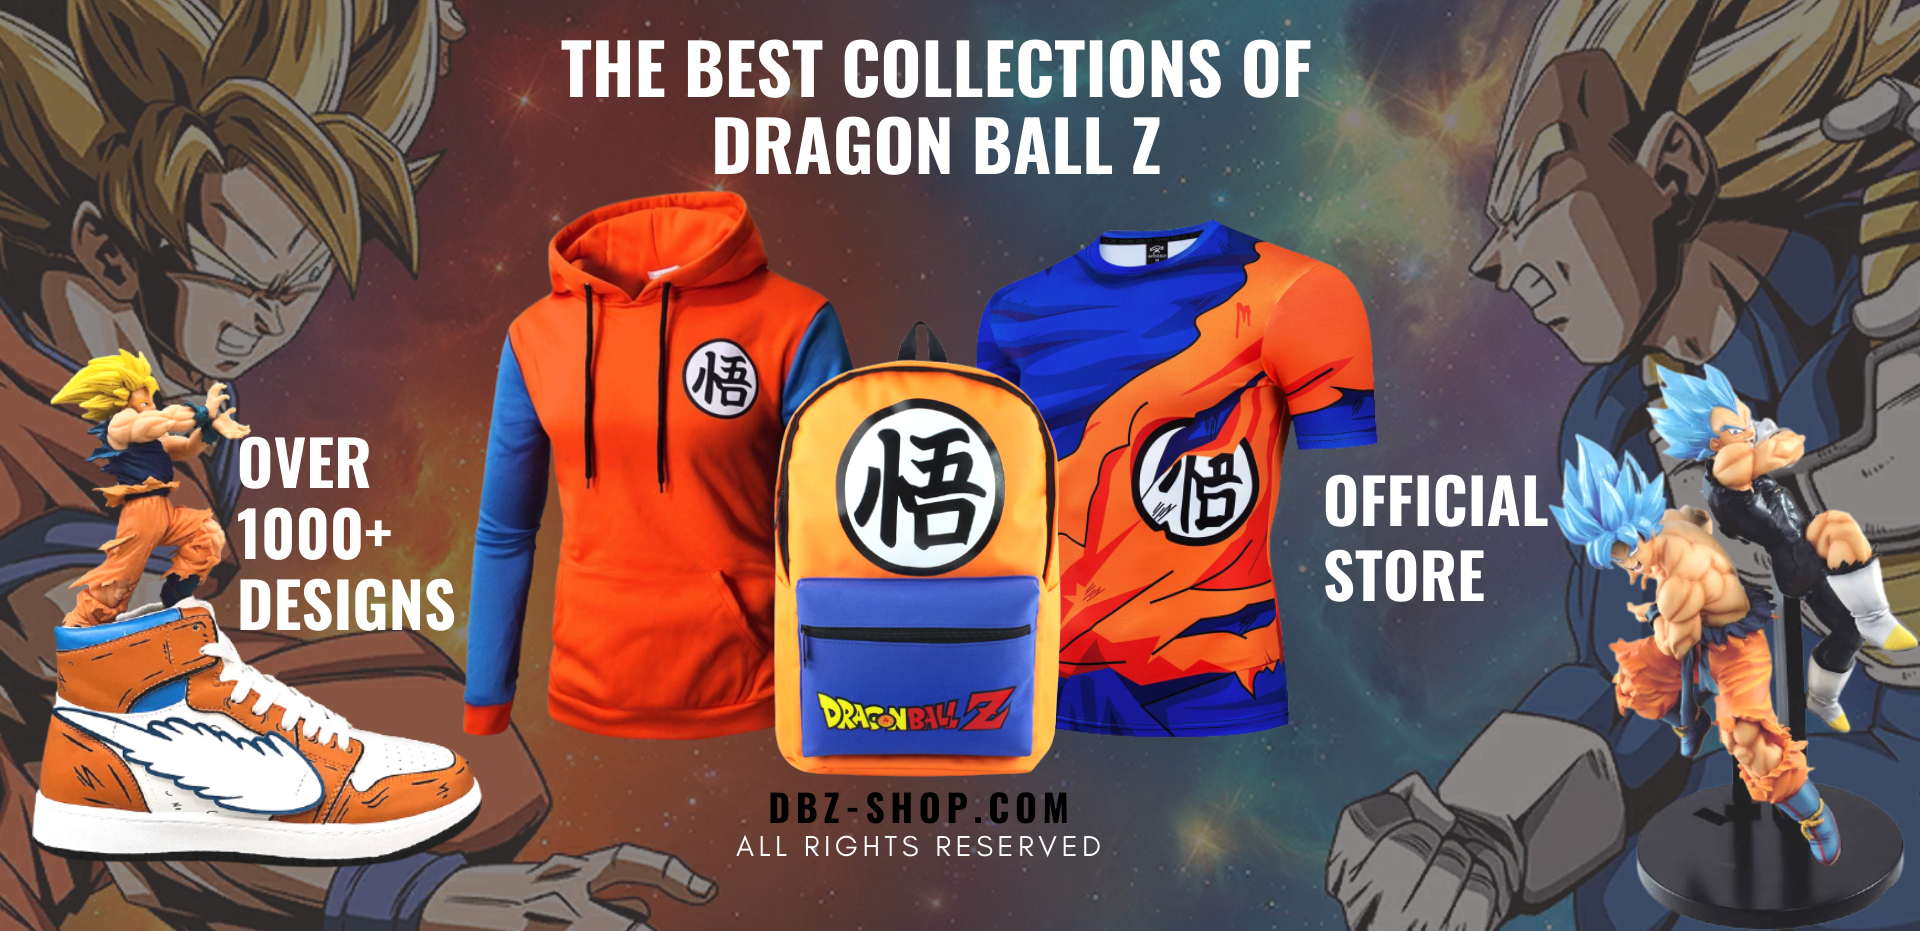 Official Dragon Ball Z Merchandise Clothing Dbz Shop